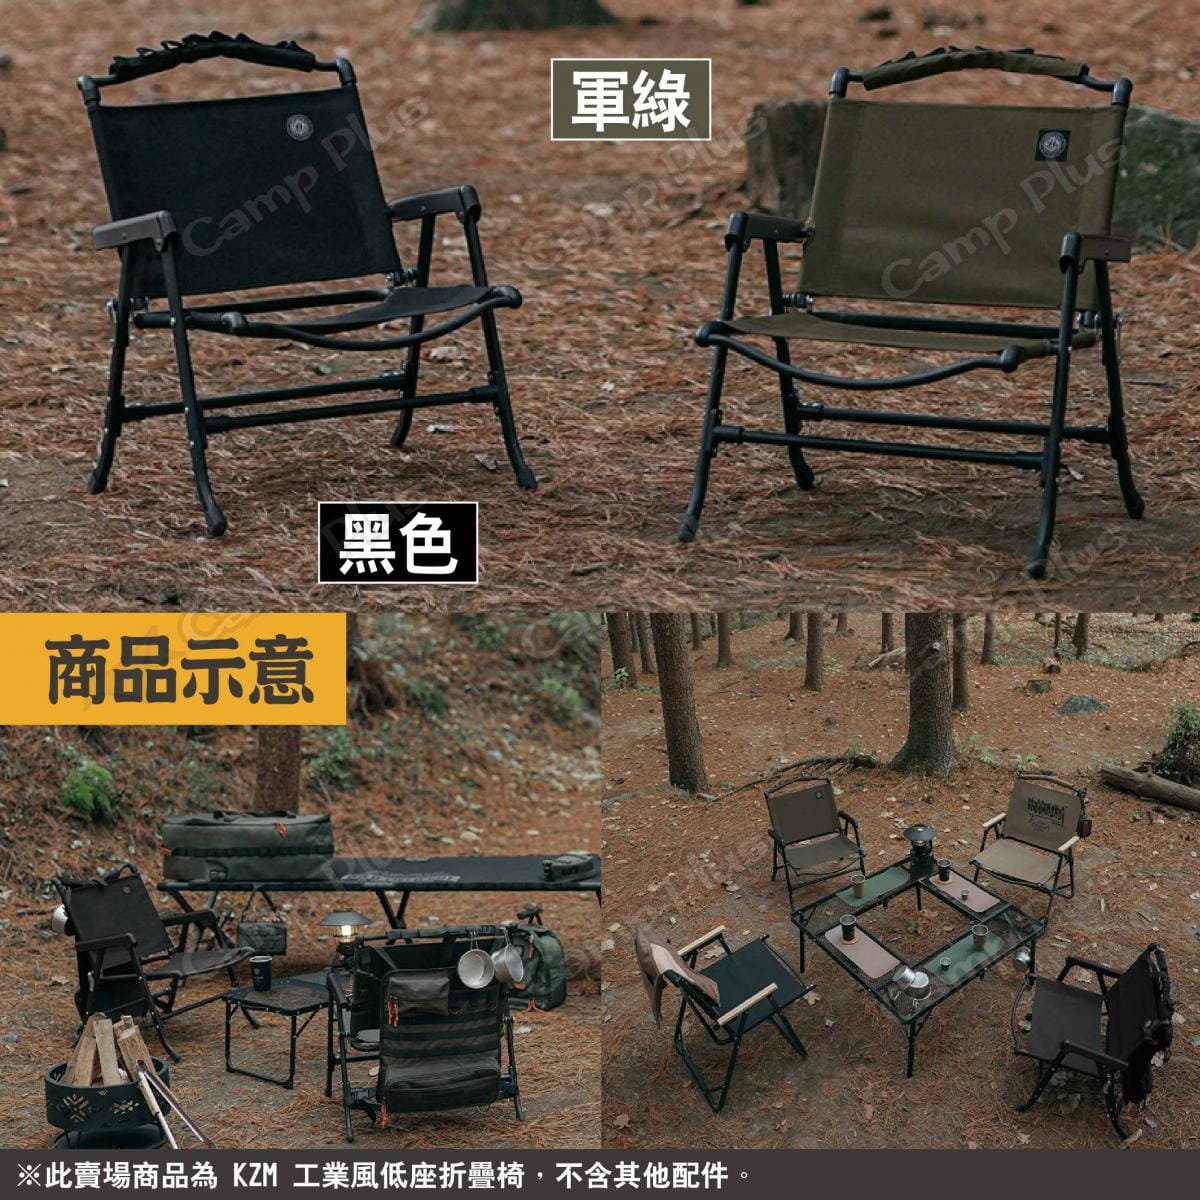 【KZM】工業風低座折疊椅 兩色 K23T1C02KH/BK 悠遊戶外 5